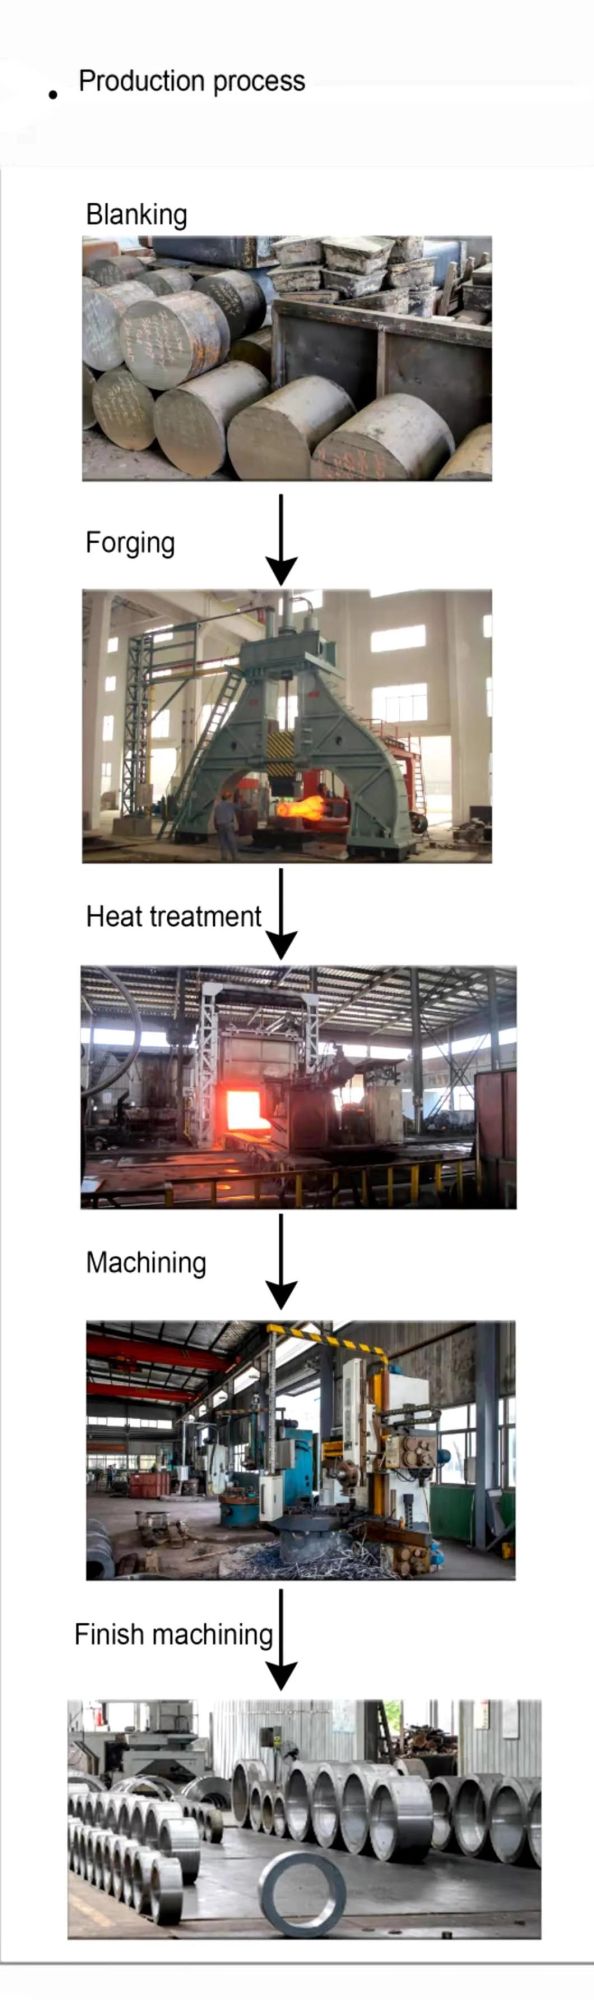 Hot Die Forging Process Steel Forgings for Shipbuilding Industries